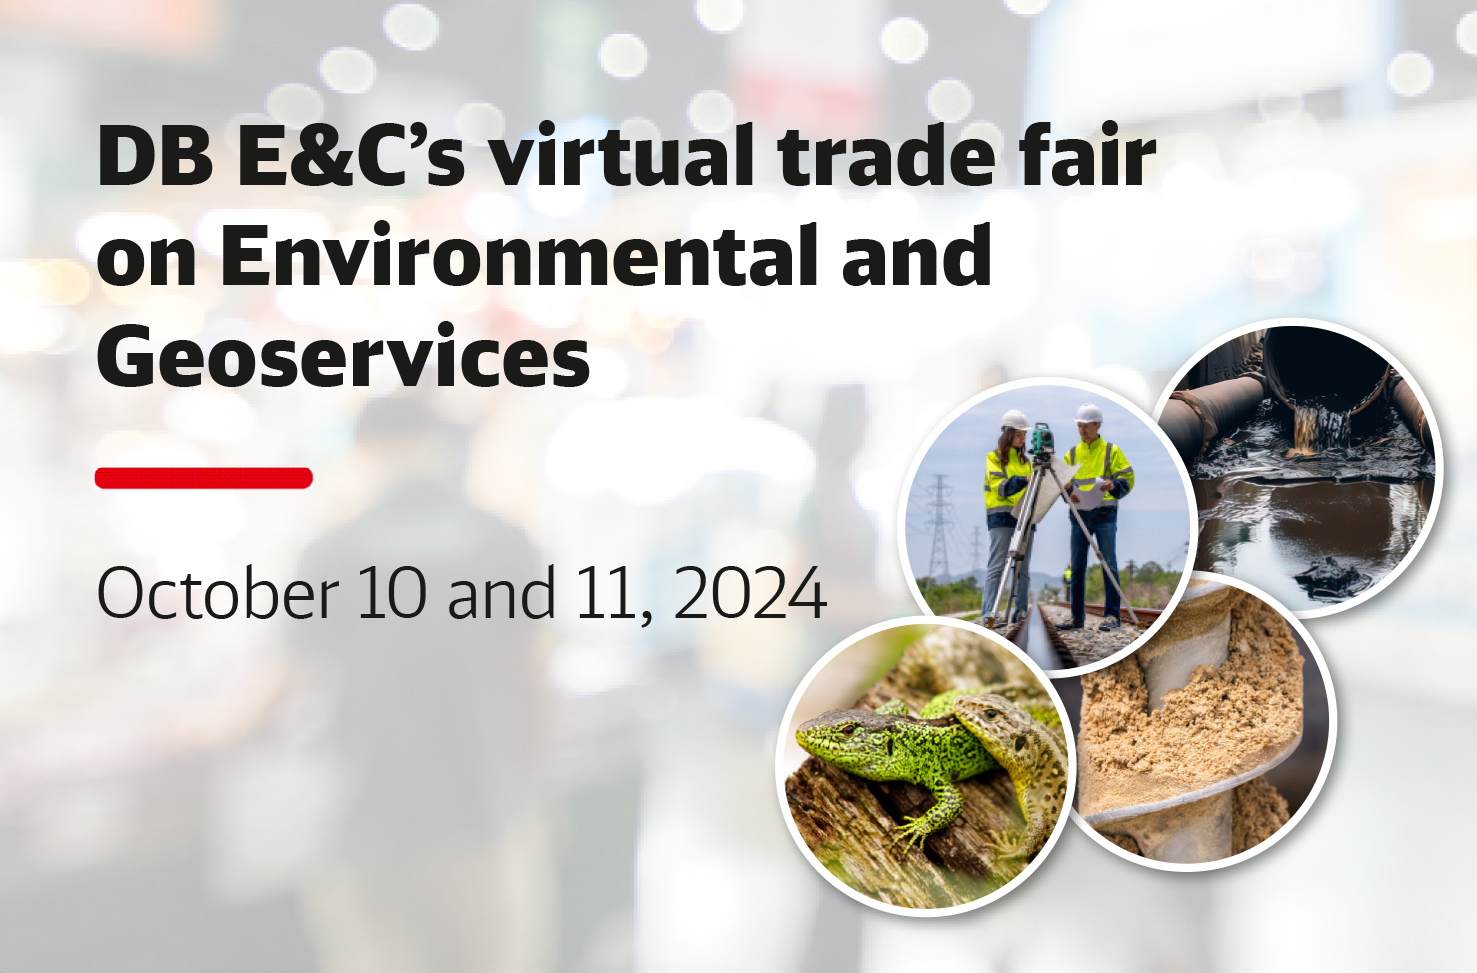 Virtual trade fair on Environmental and Geoservices